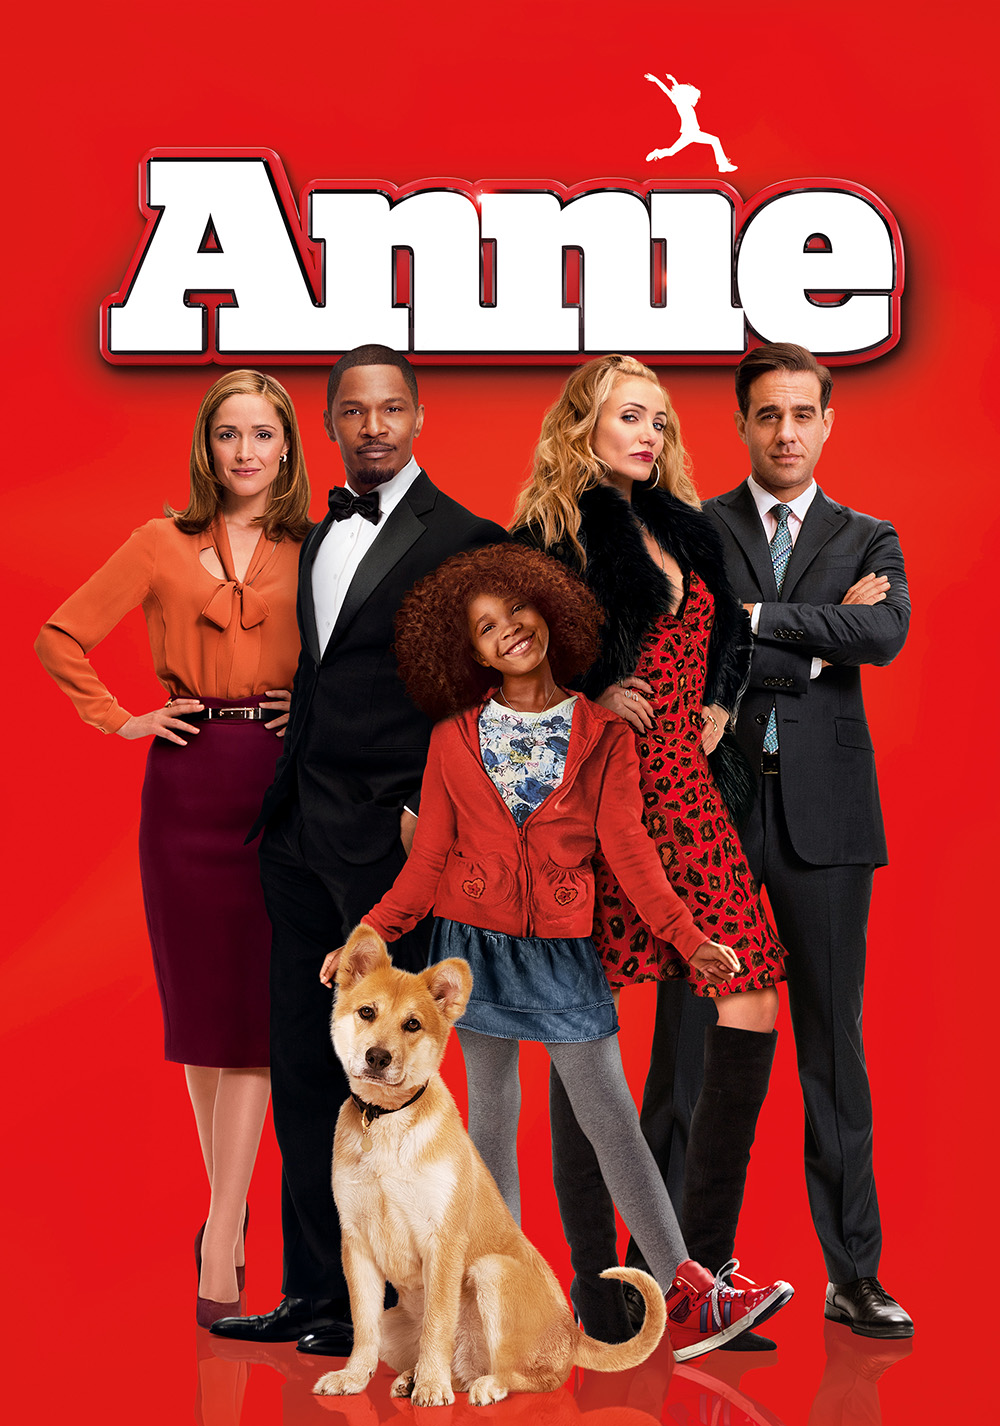 Annie (2014) Picture